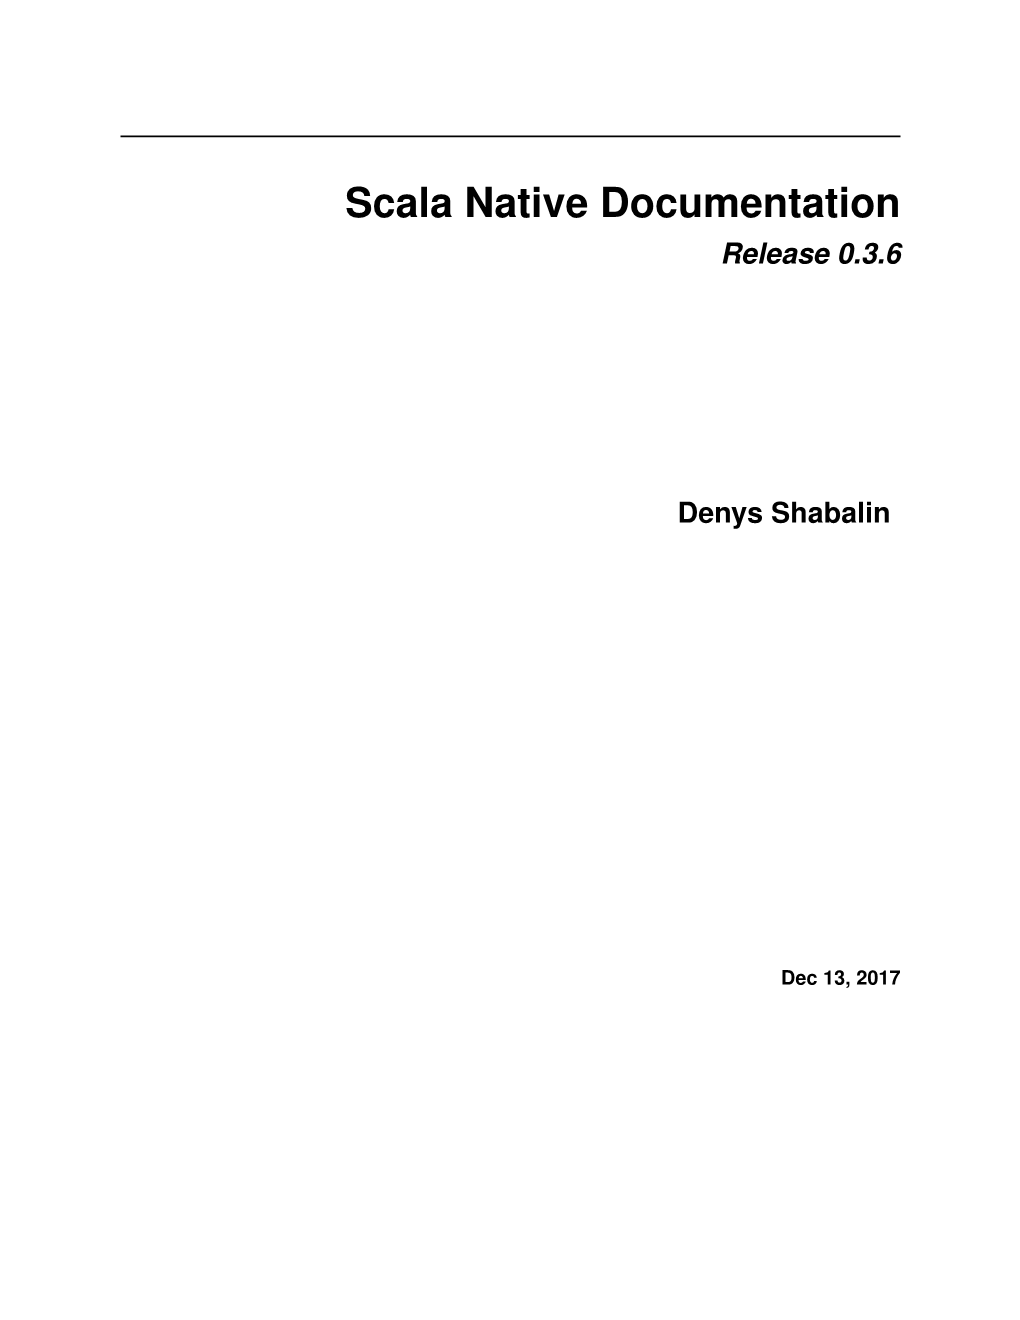 Scala Native Documentation Release 0.3.6